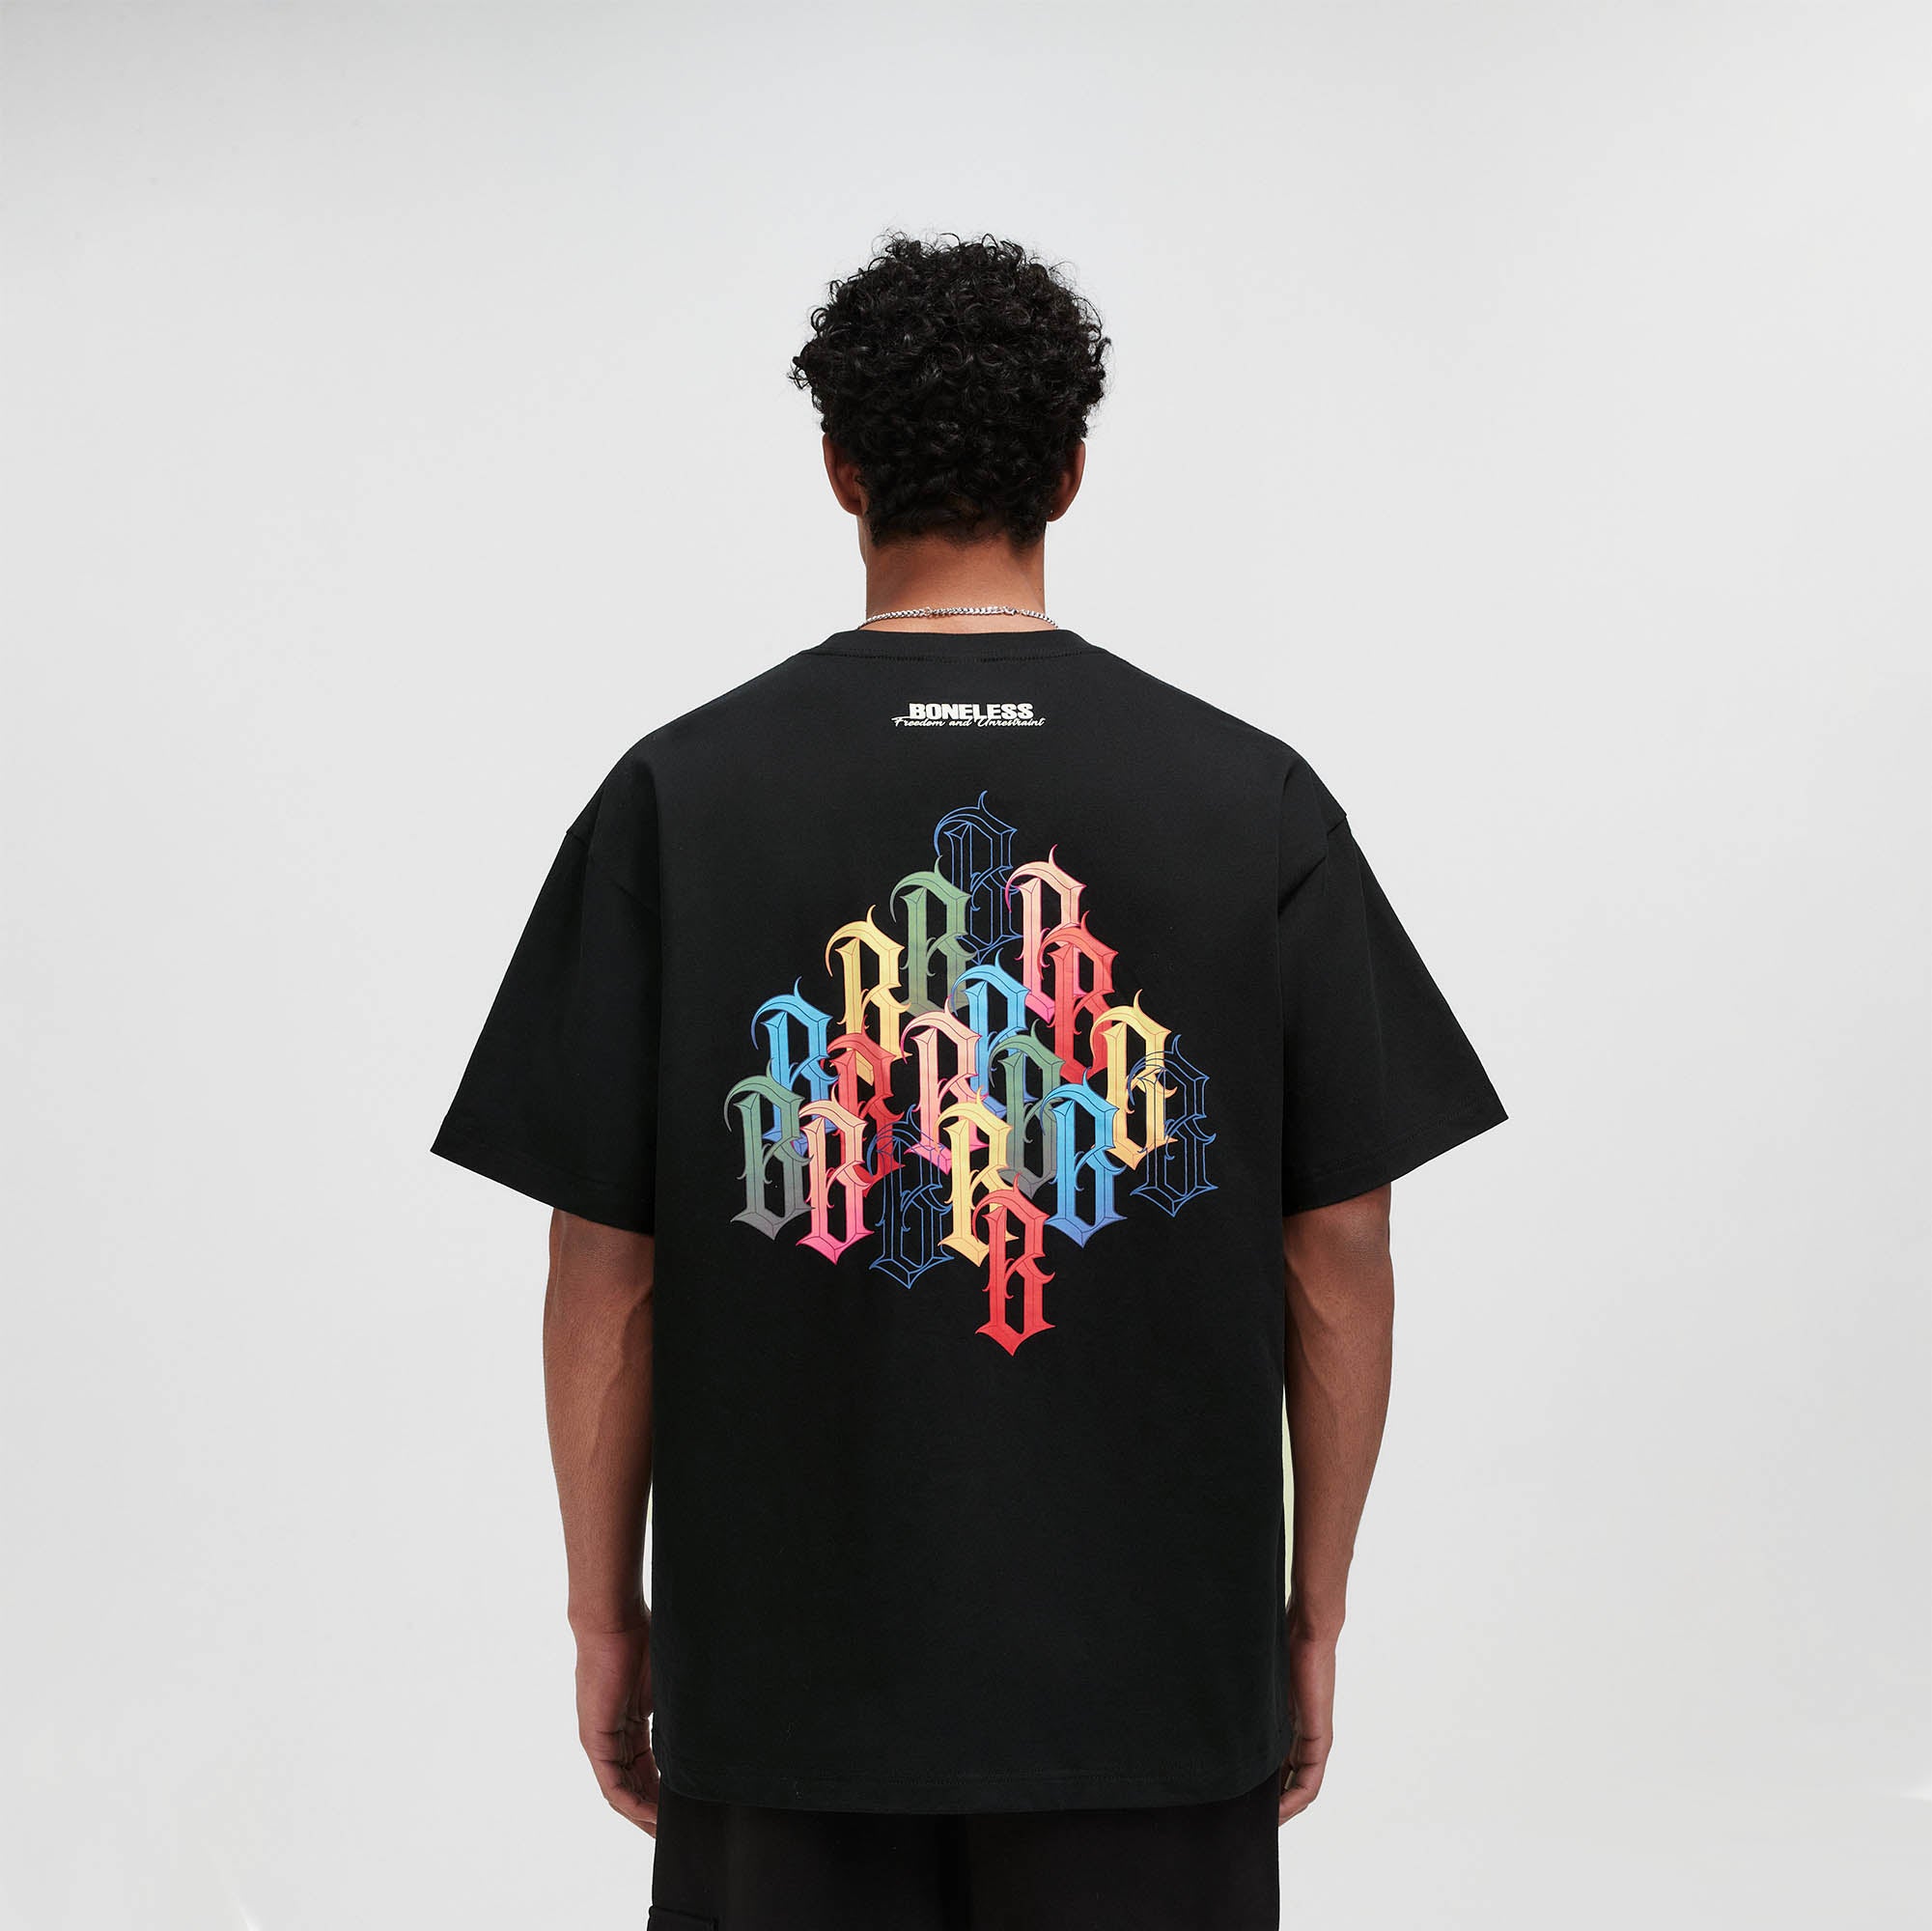 BONELESS Rainbow Collage LOGO T-Shirt